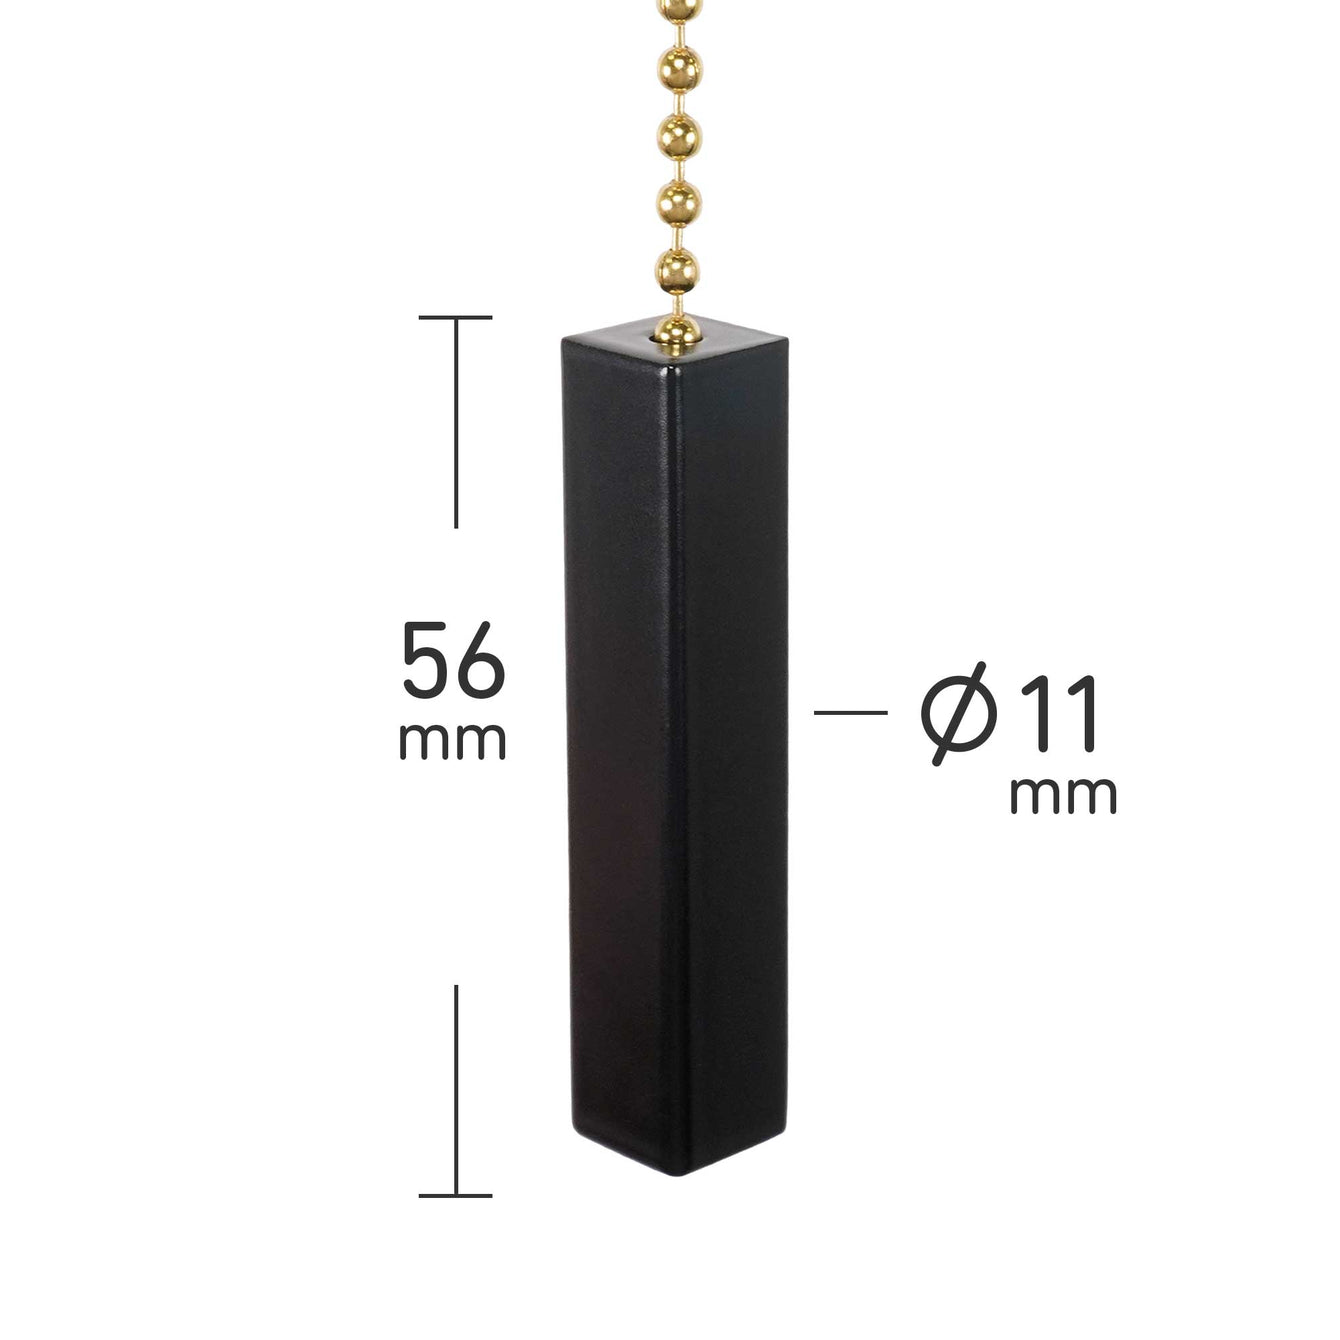 ElekTek Premium Brushed Brass Bathroom Light Pull Cord Switch Kit with Pull Chain Handle Cream Disc / Brass